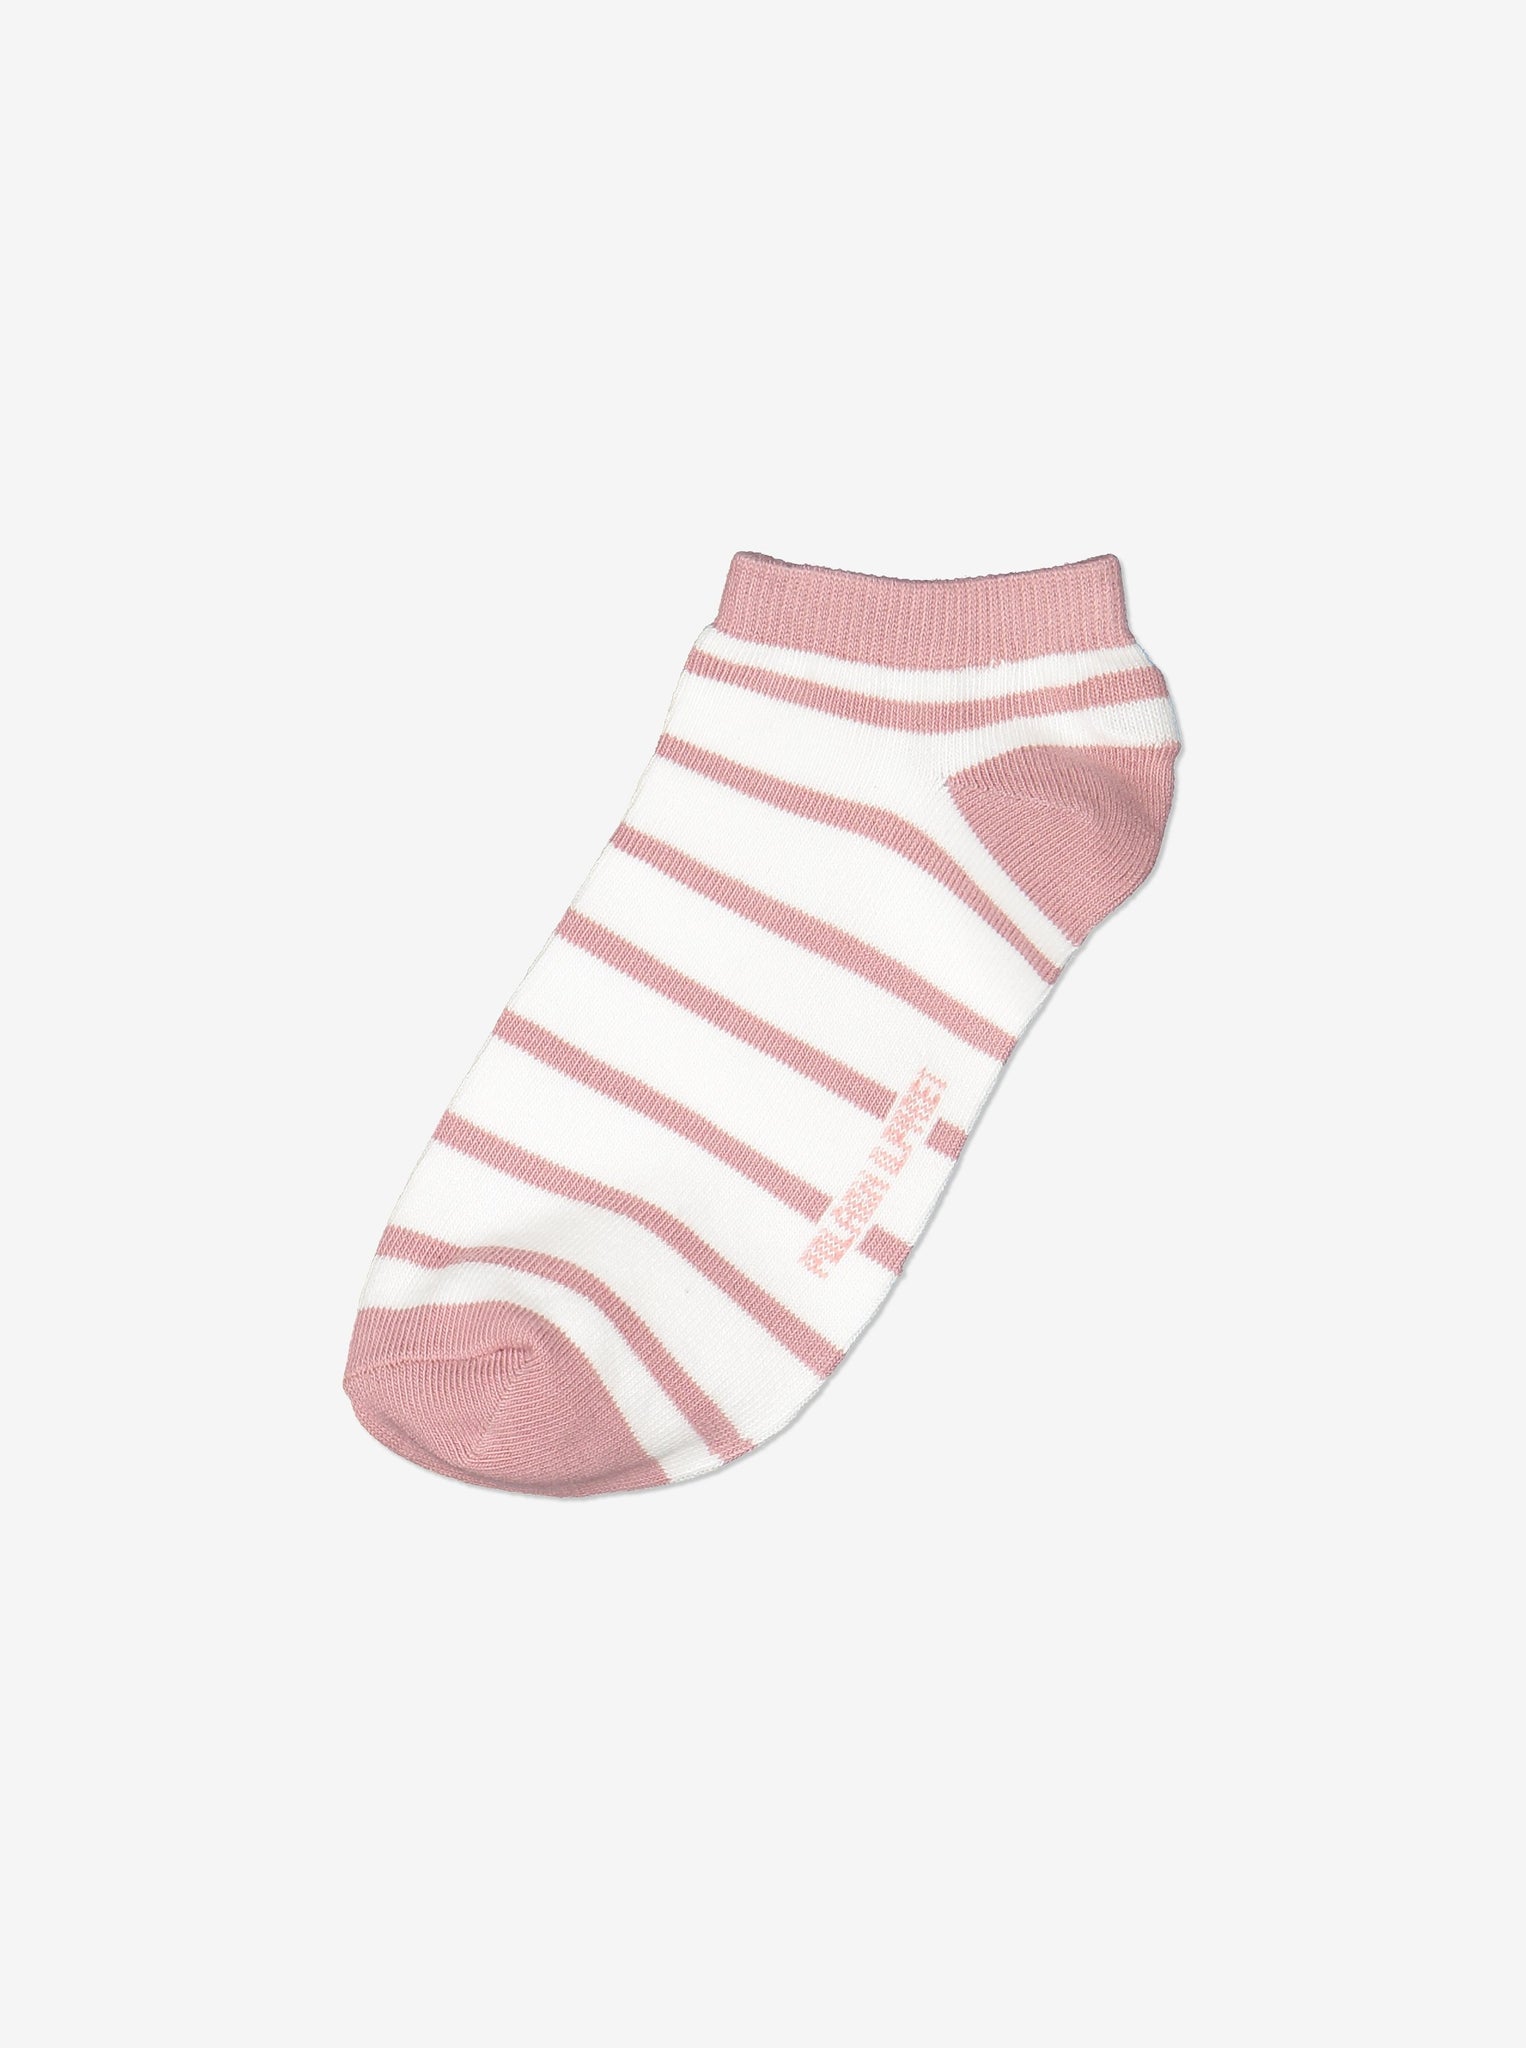 2 Pack Girls Striped Pink Ankle Socks